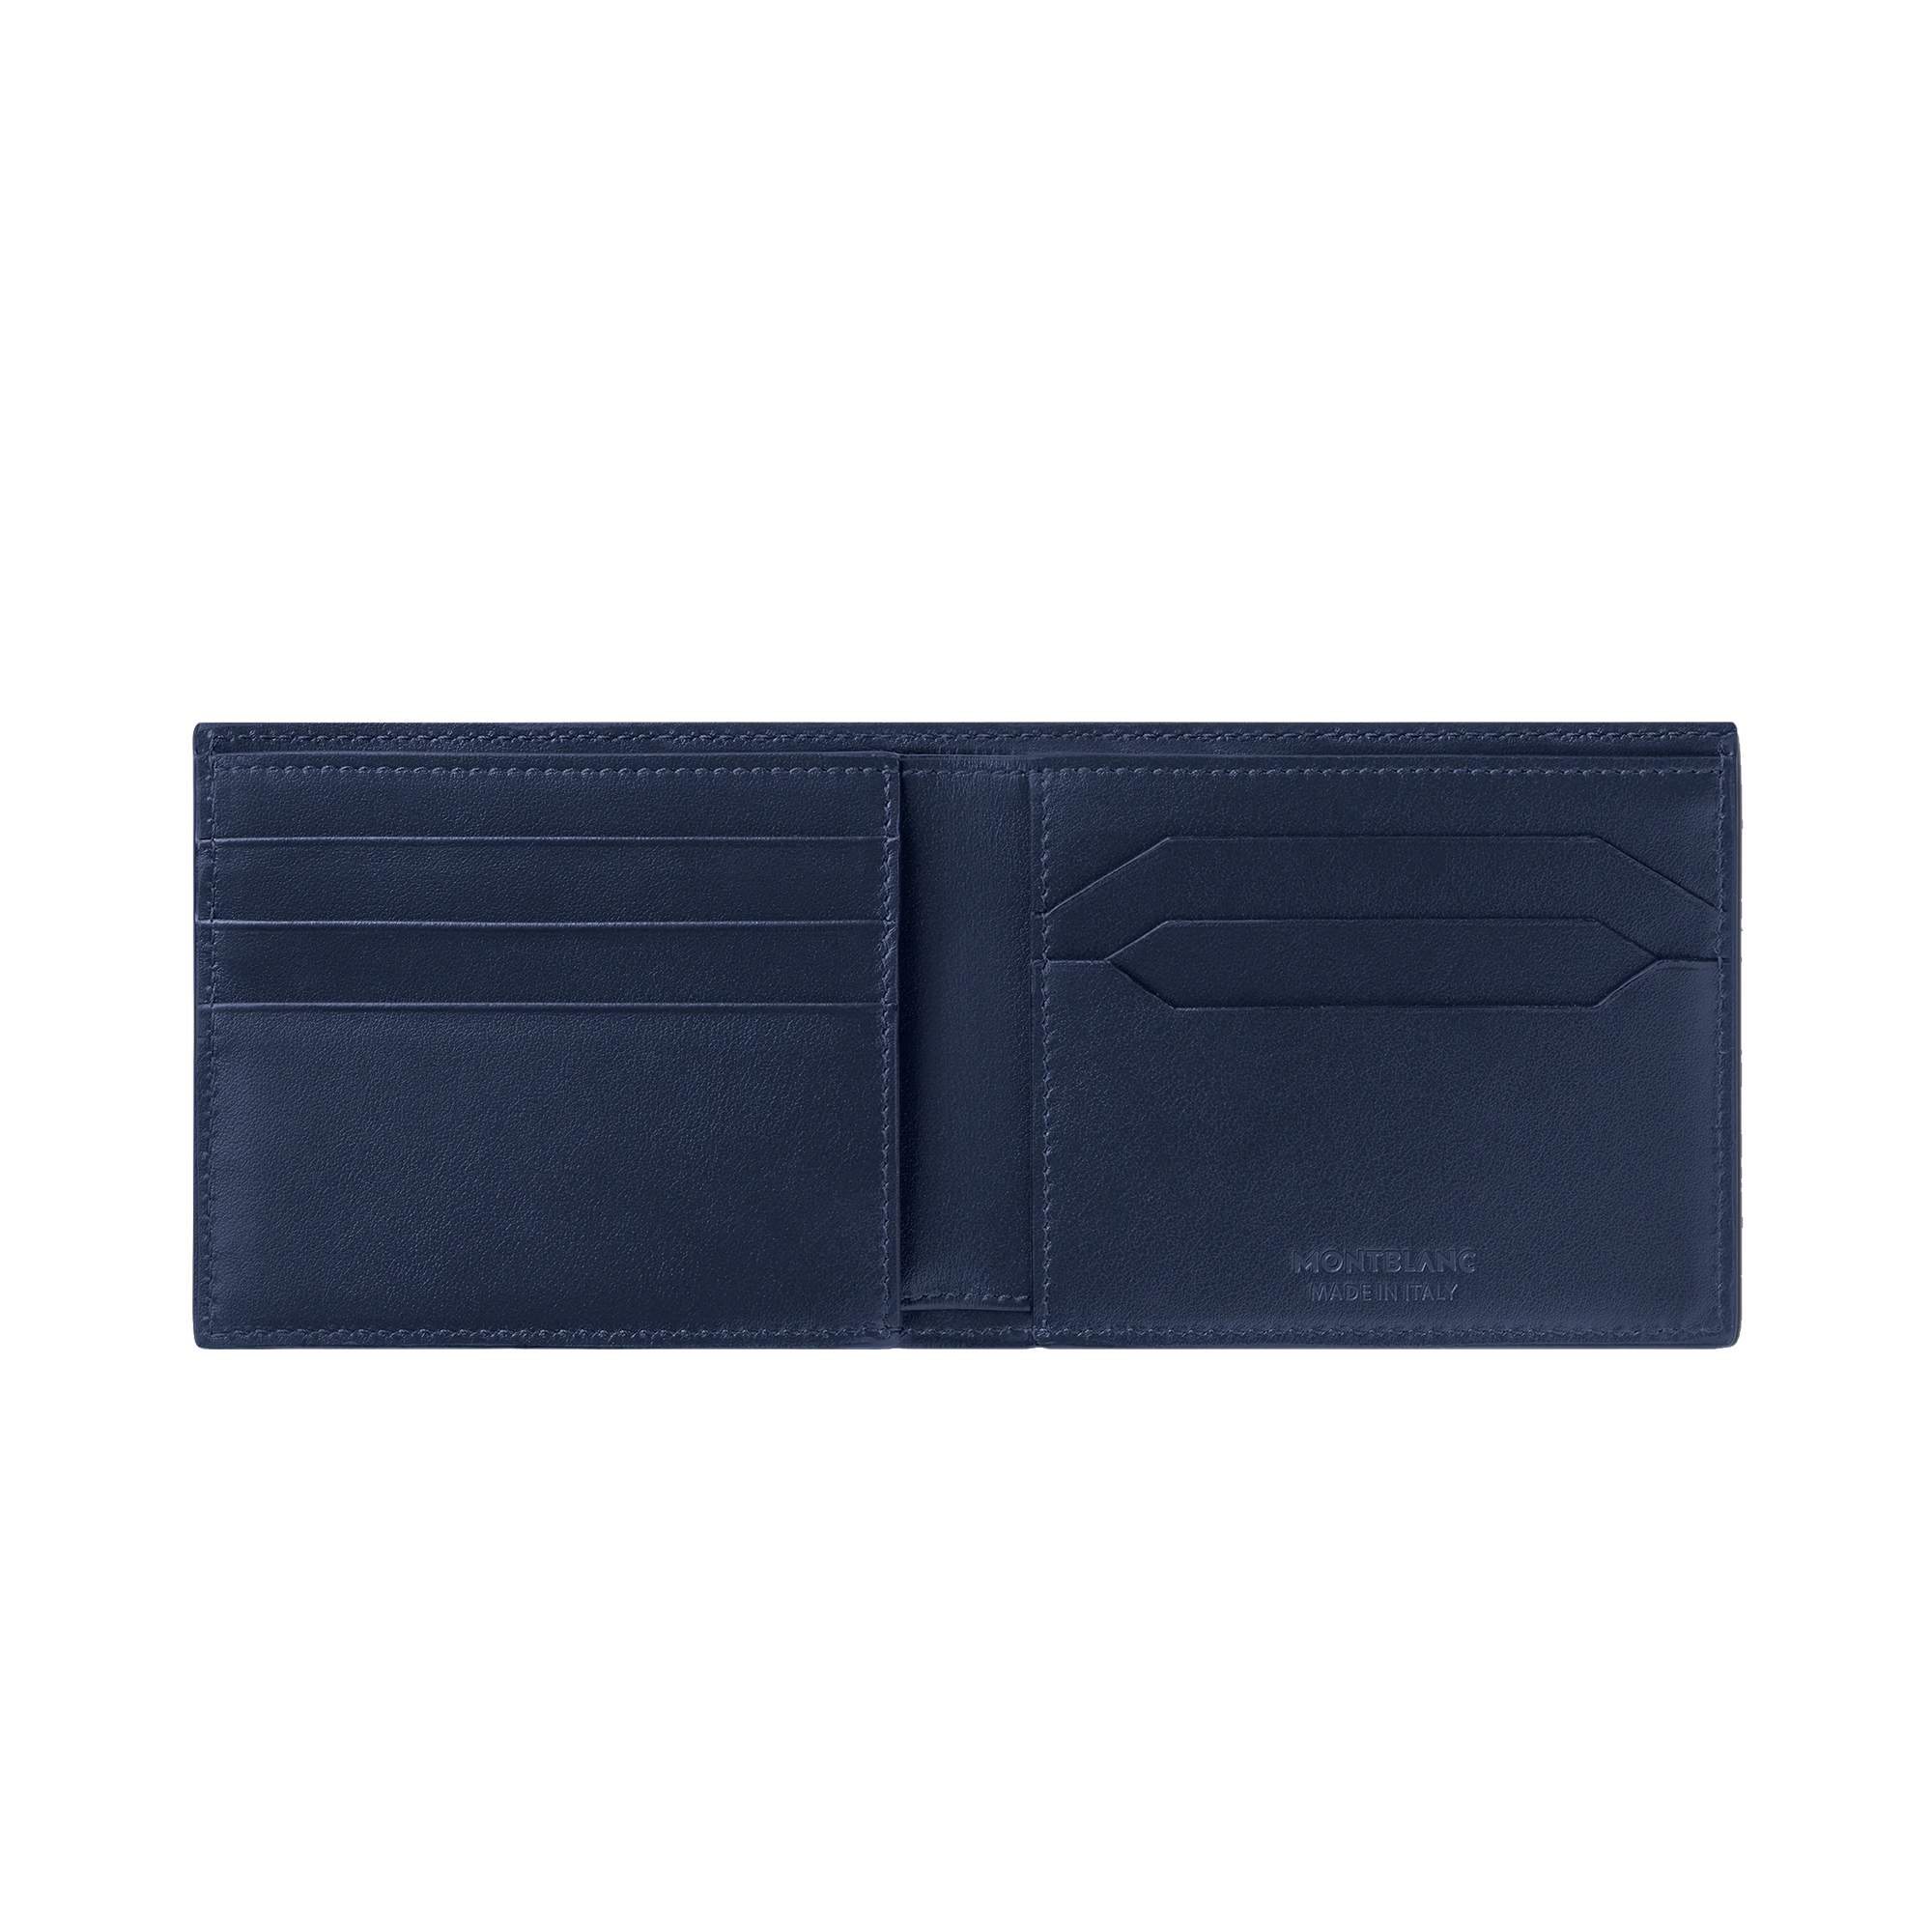 Meisterstuck Wallet 6cc in Ink Blue Leather